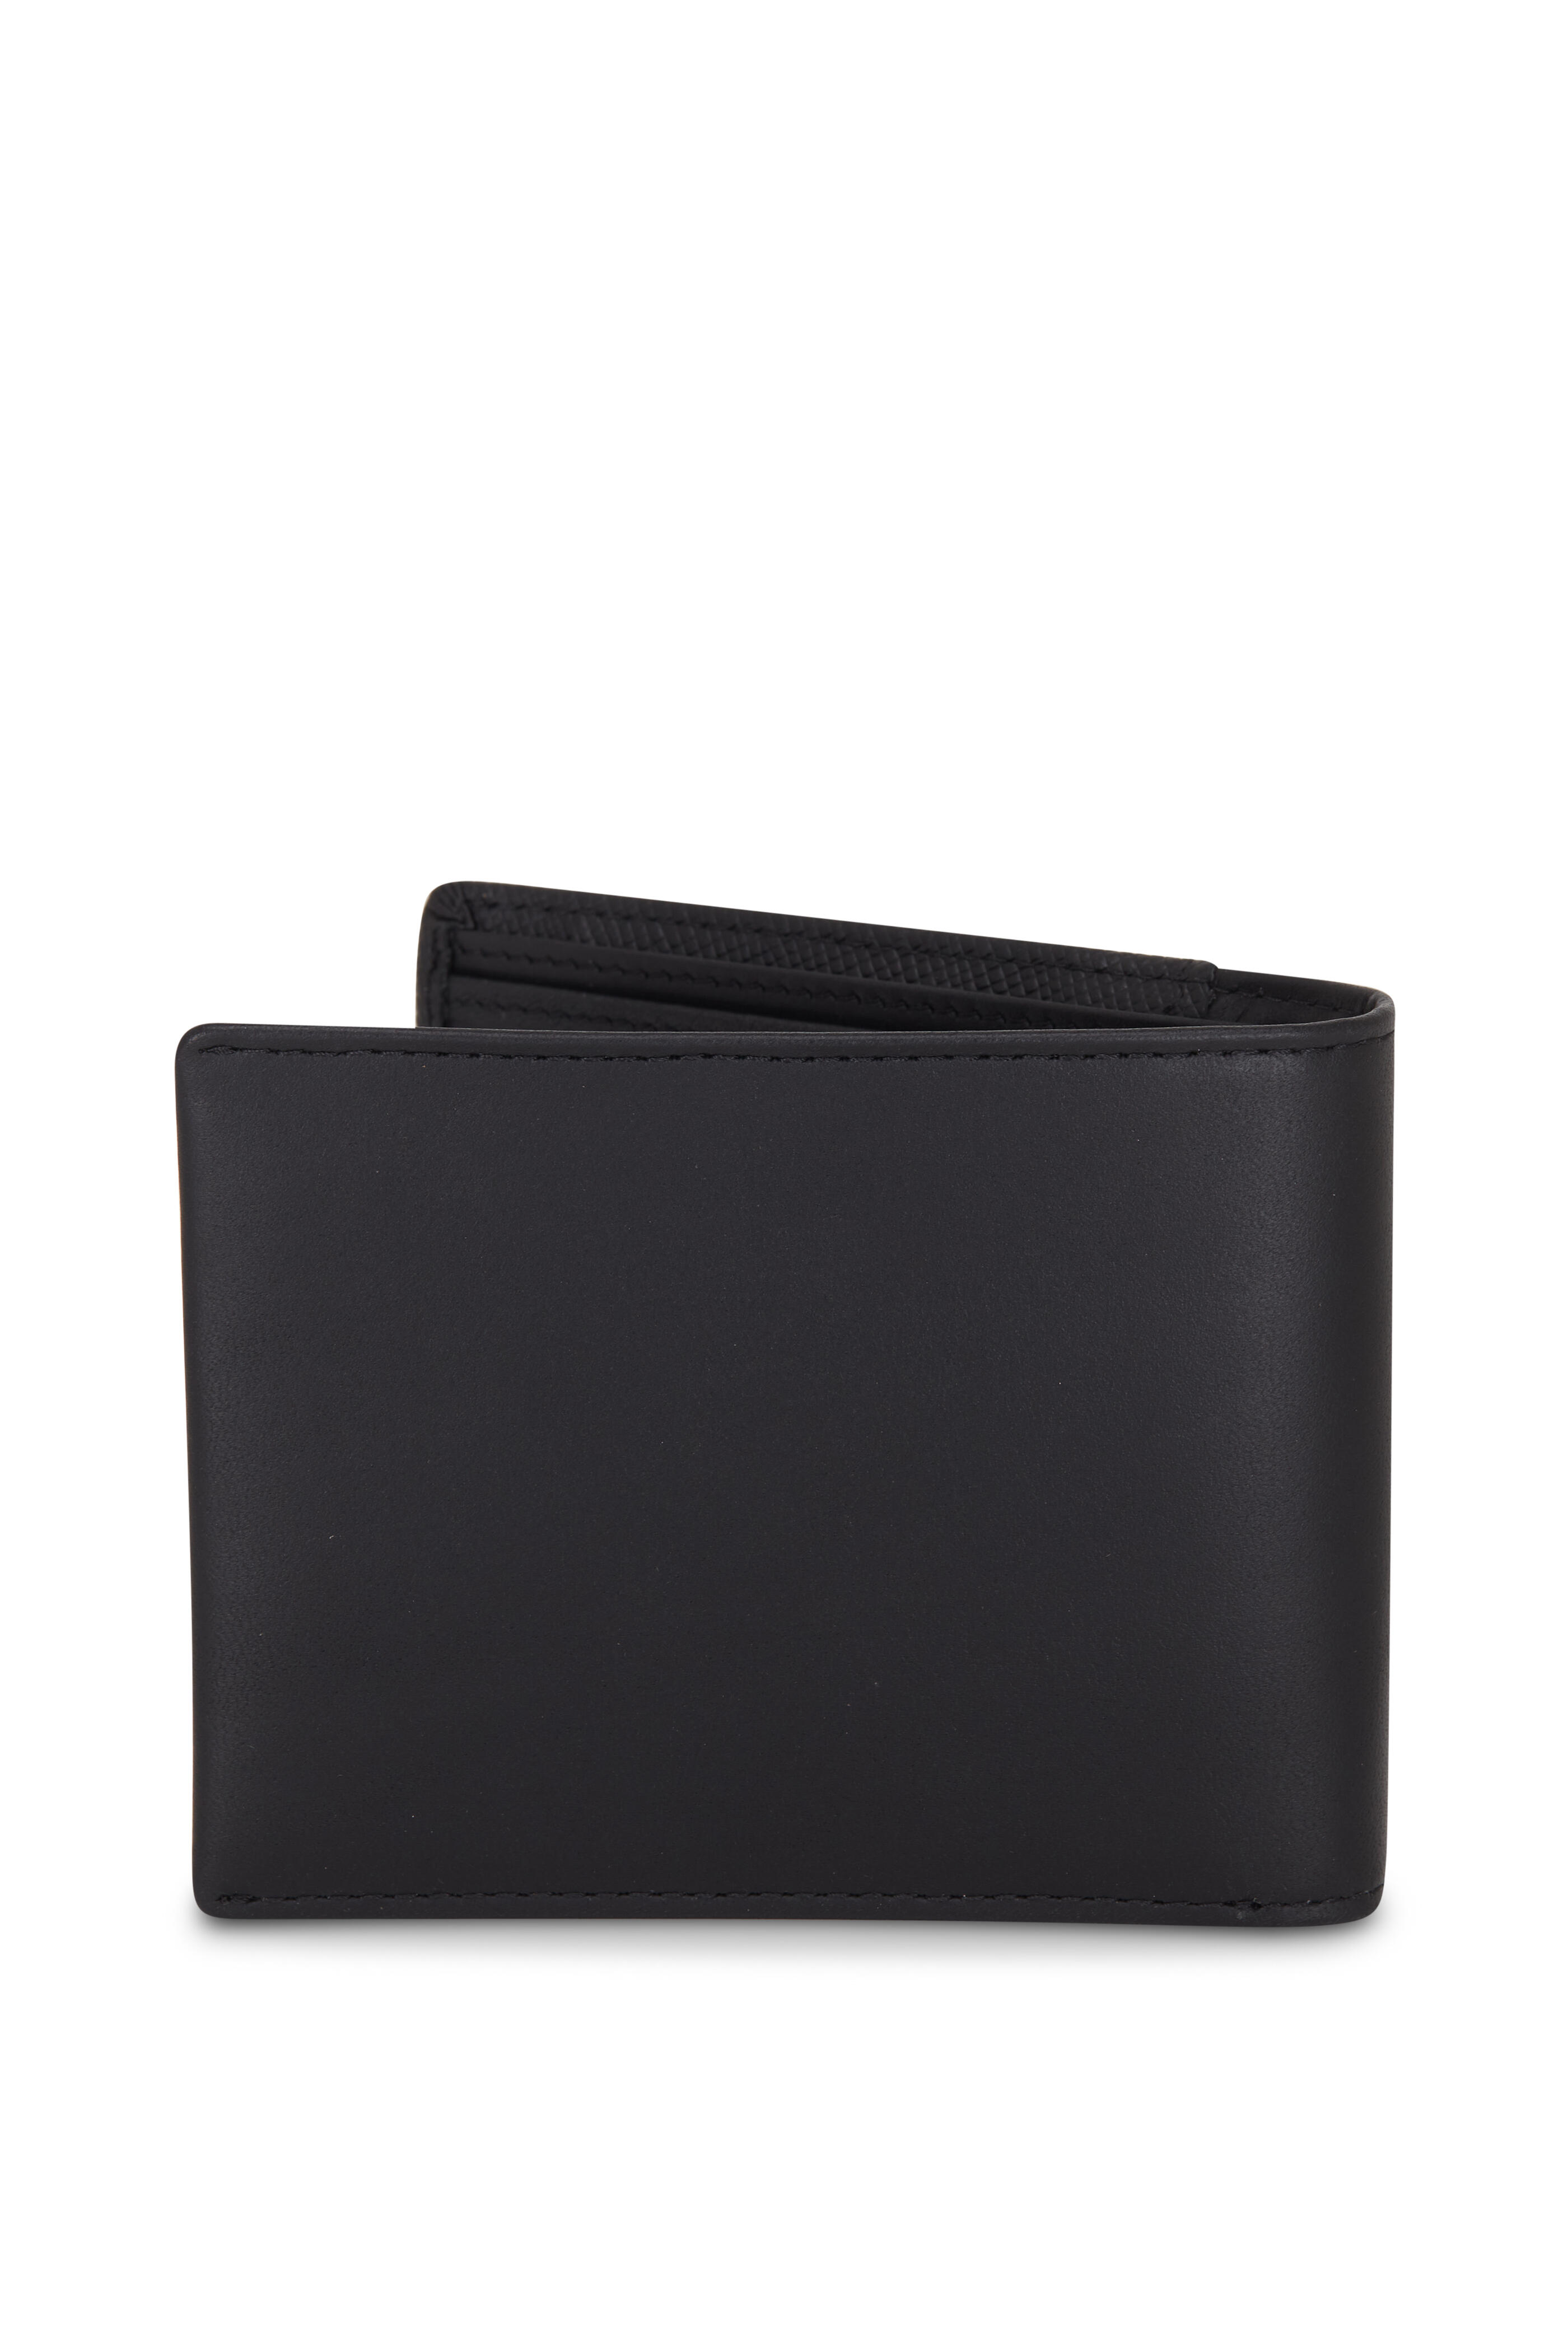 Bosca - Saffiano Black Grained Leather Bi-Fold Wallet